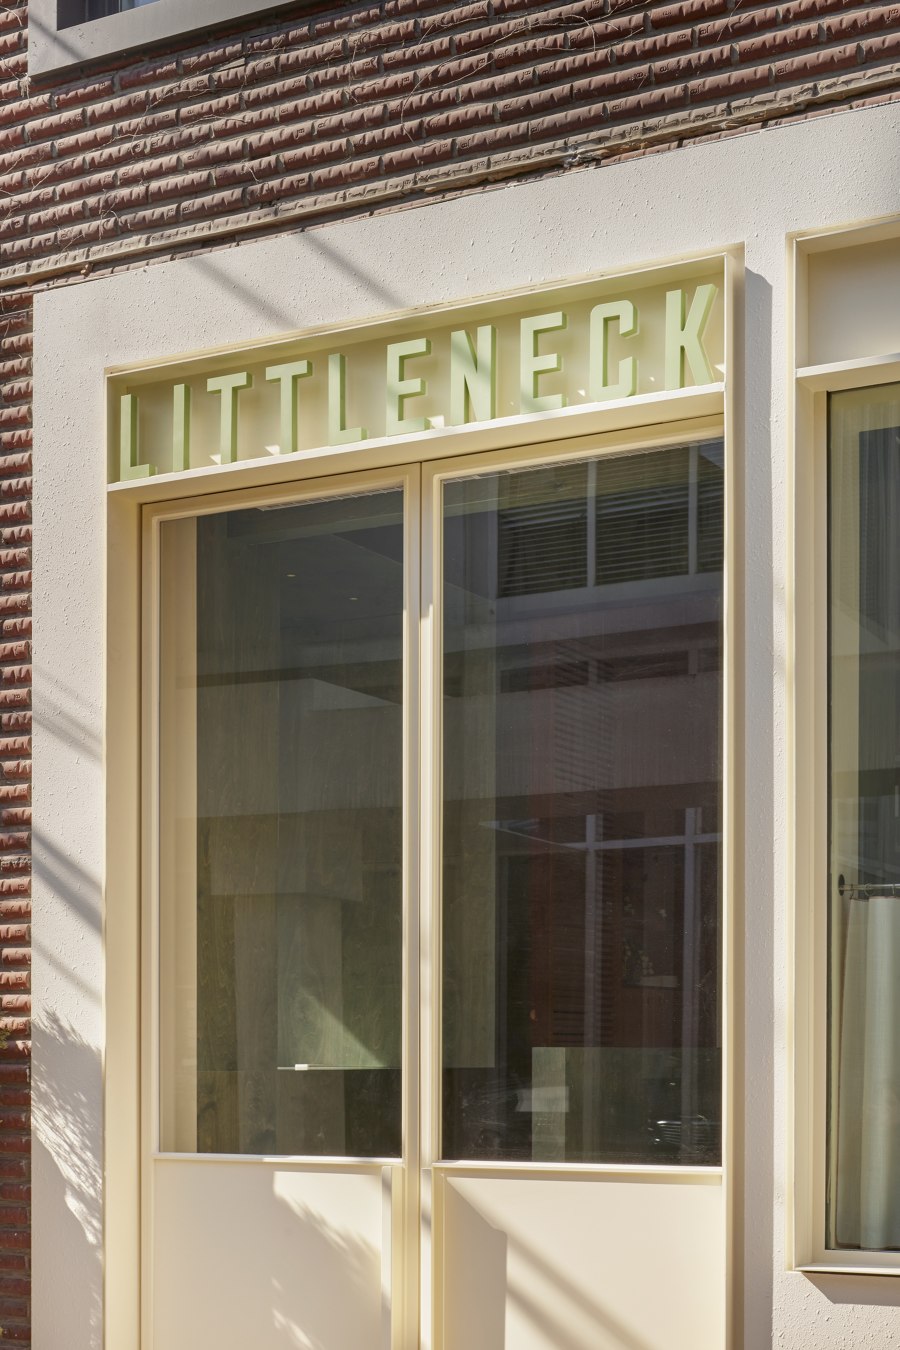 Littleneck Restaurant de SLA | Intérieurs de restaurant